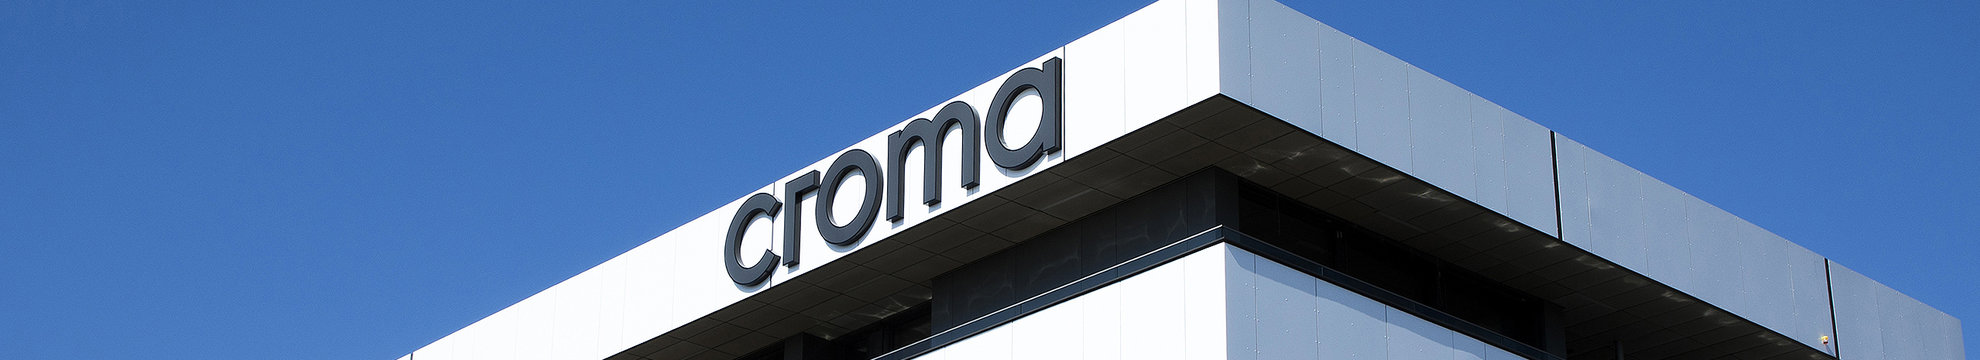 Croma-Pharma Ges. m.b.H